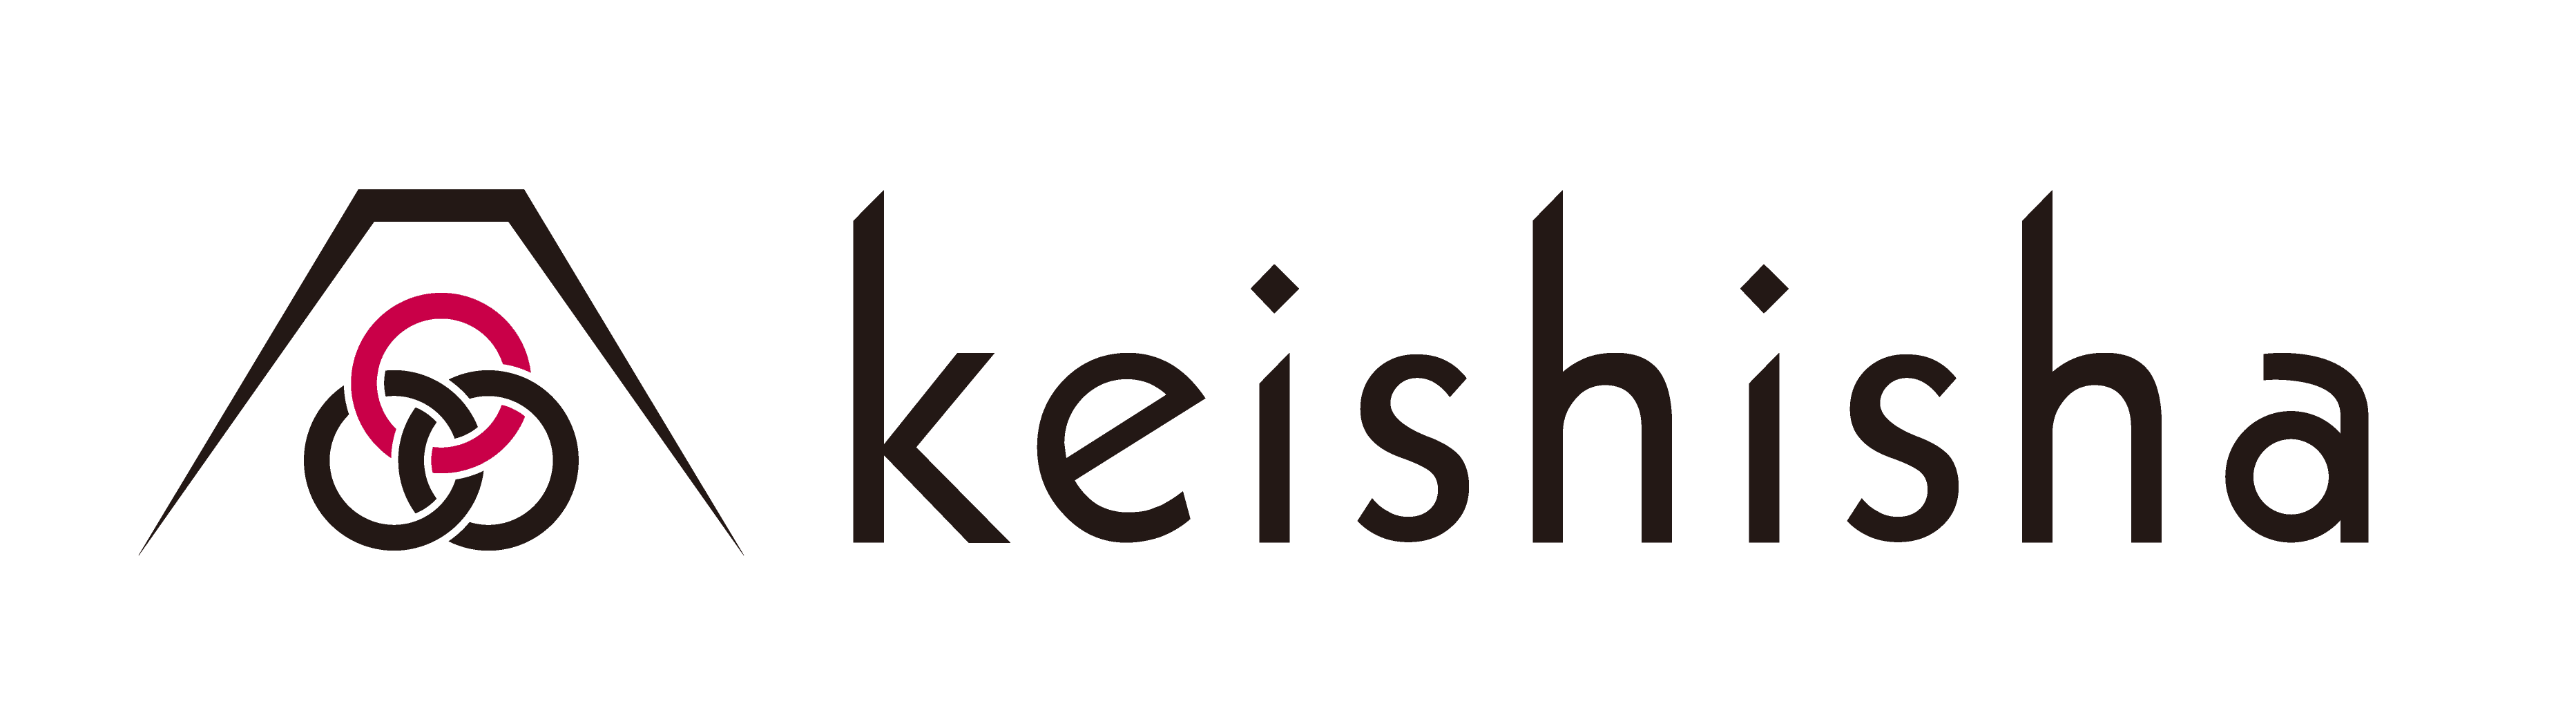 keishisha_logo_b_1.png